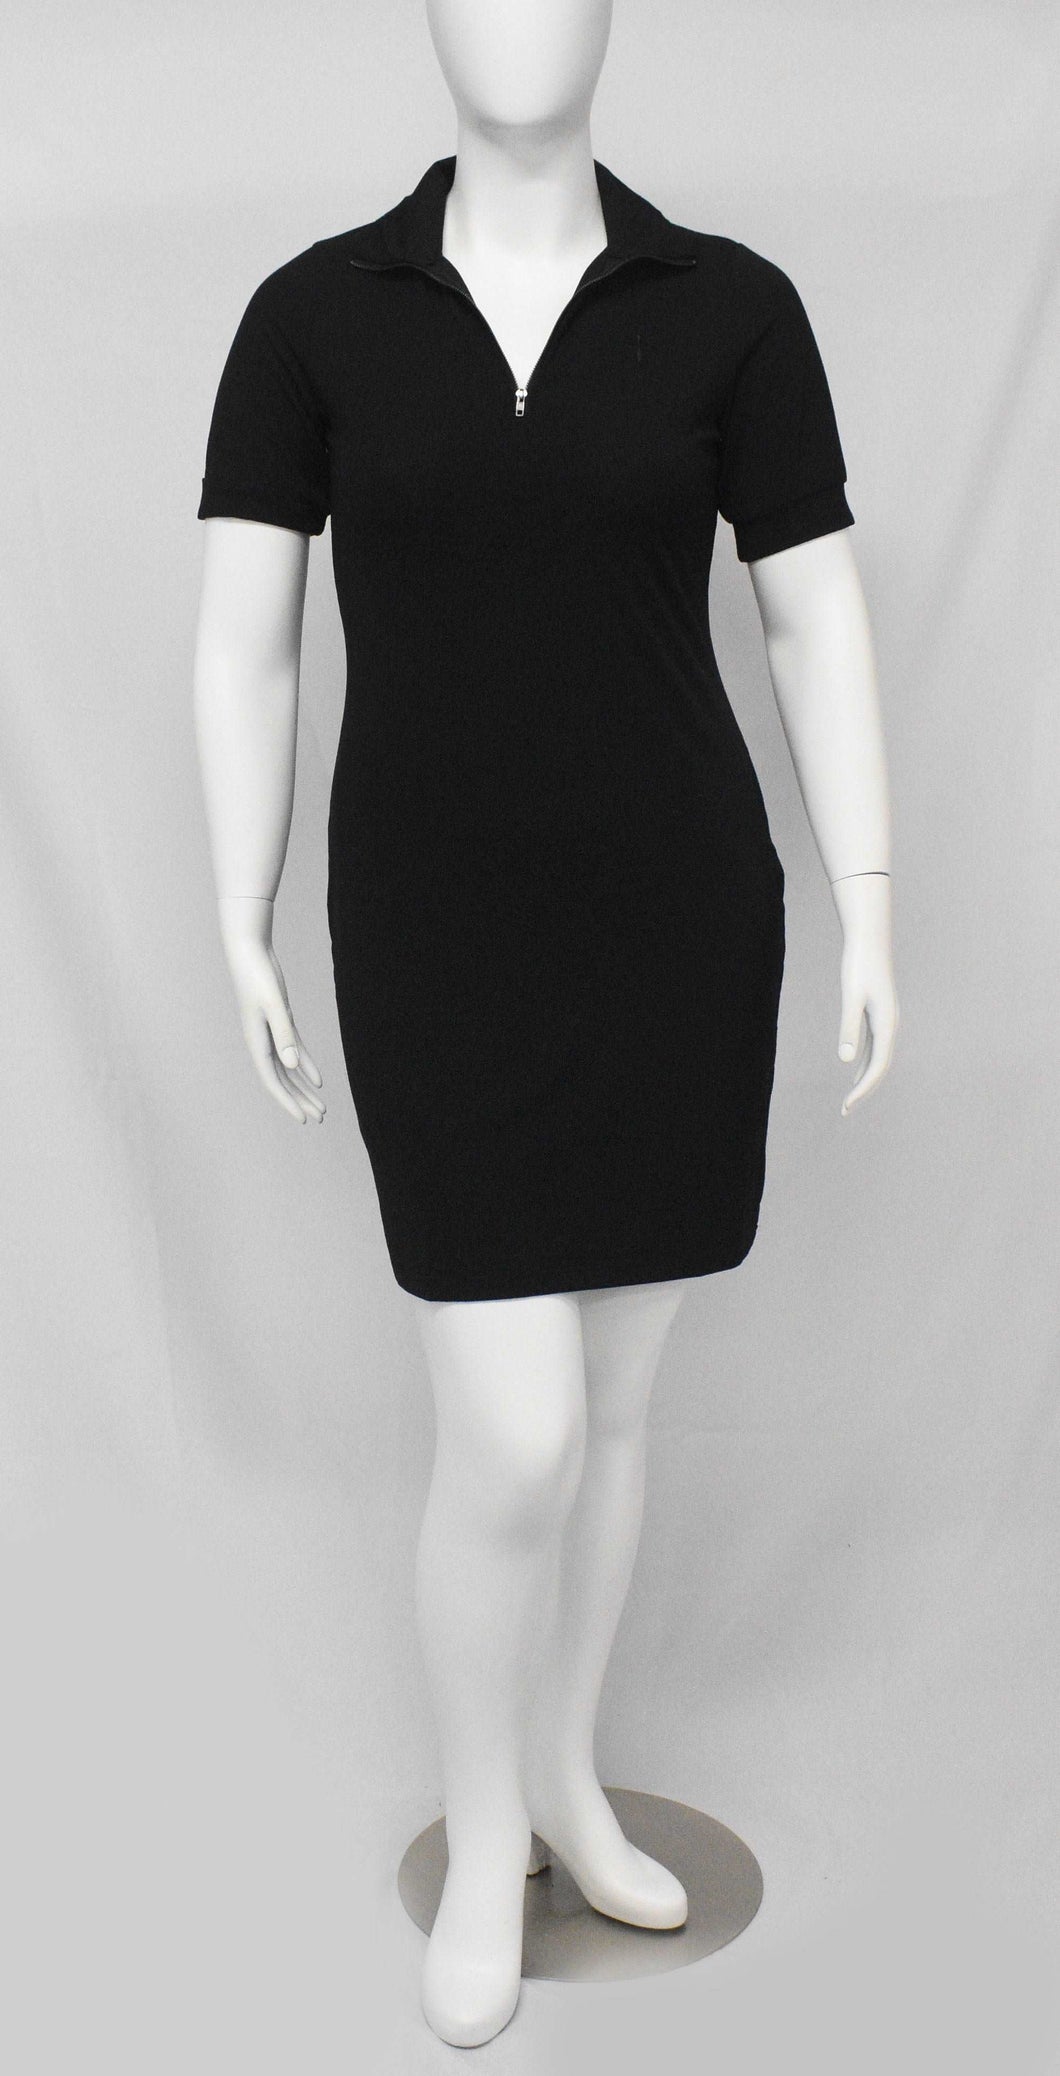 Fat Melting Sporting Gown Collar Shaper Dress- Black